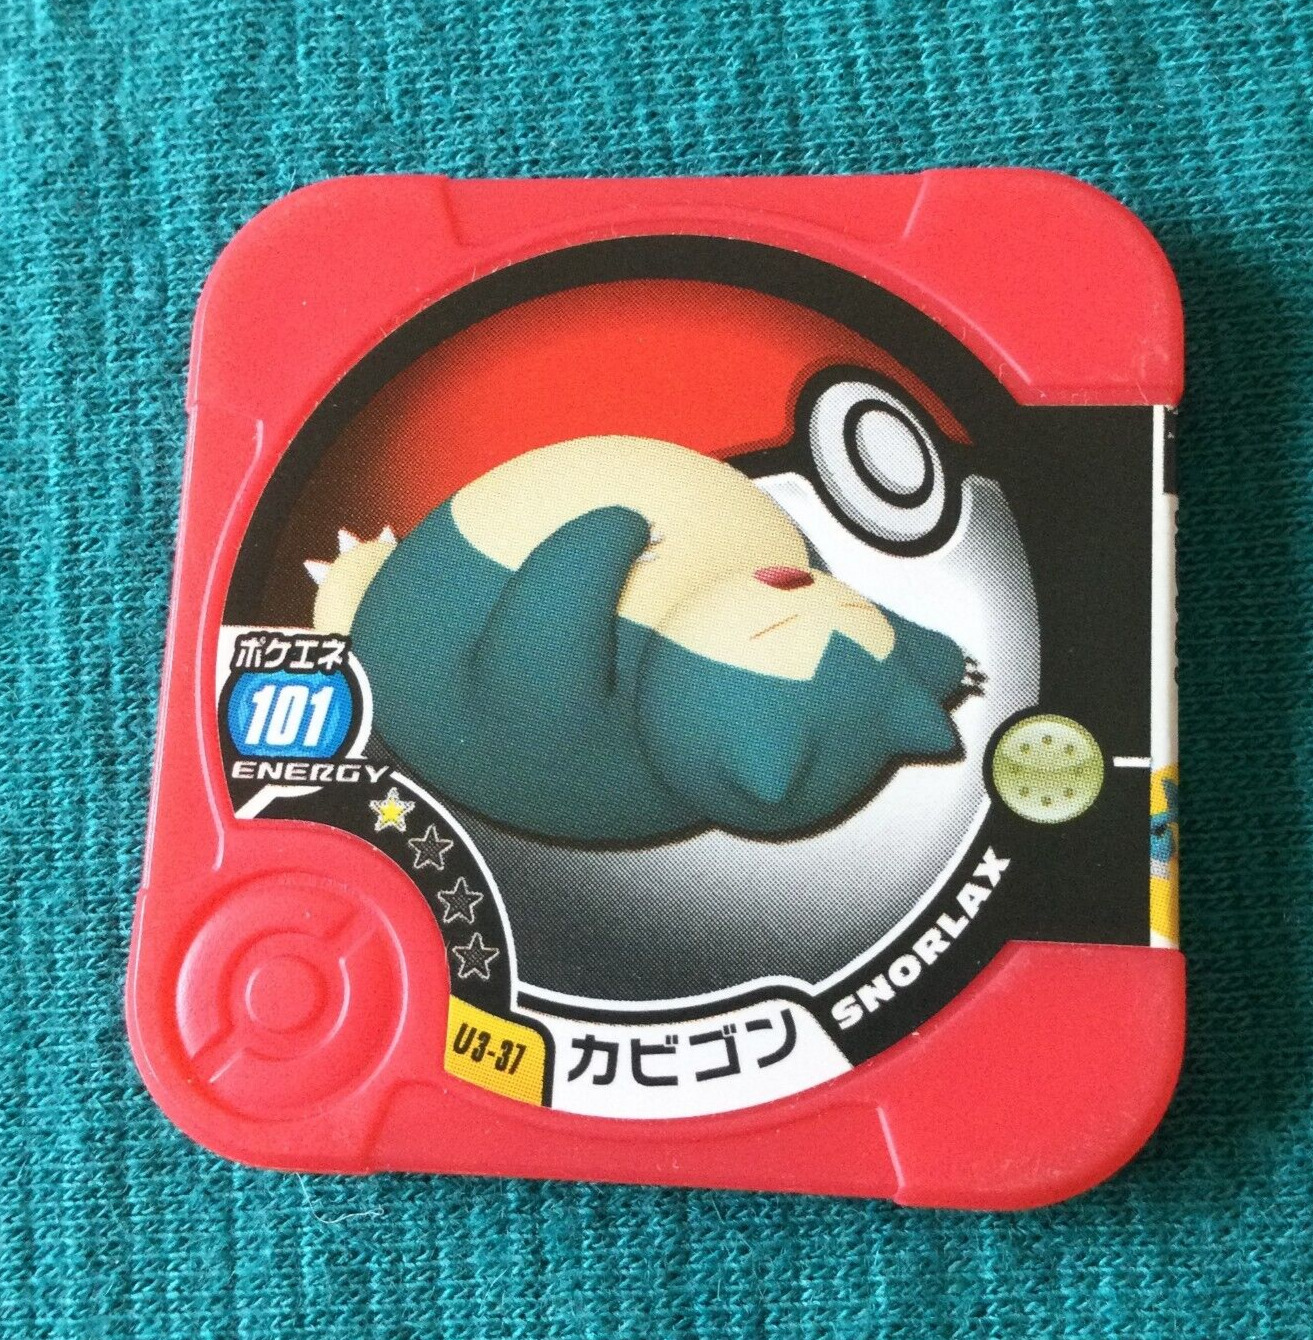 【LP】Pokemon Tretta Snorlax U3-37 Japanese Nintendo